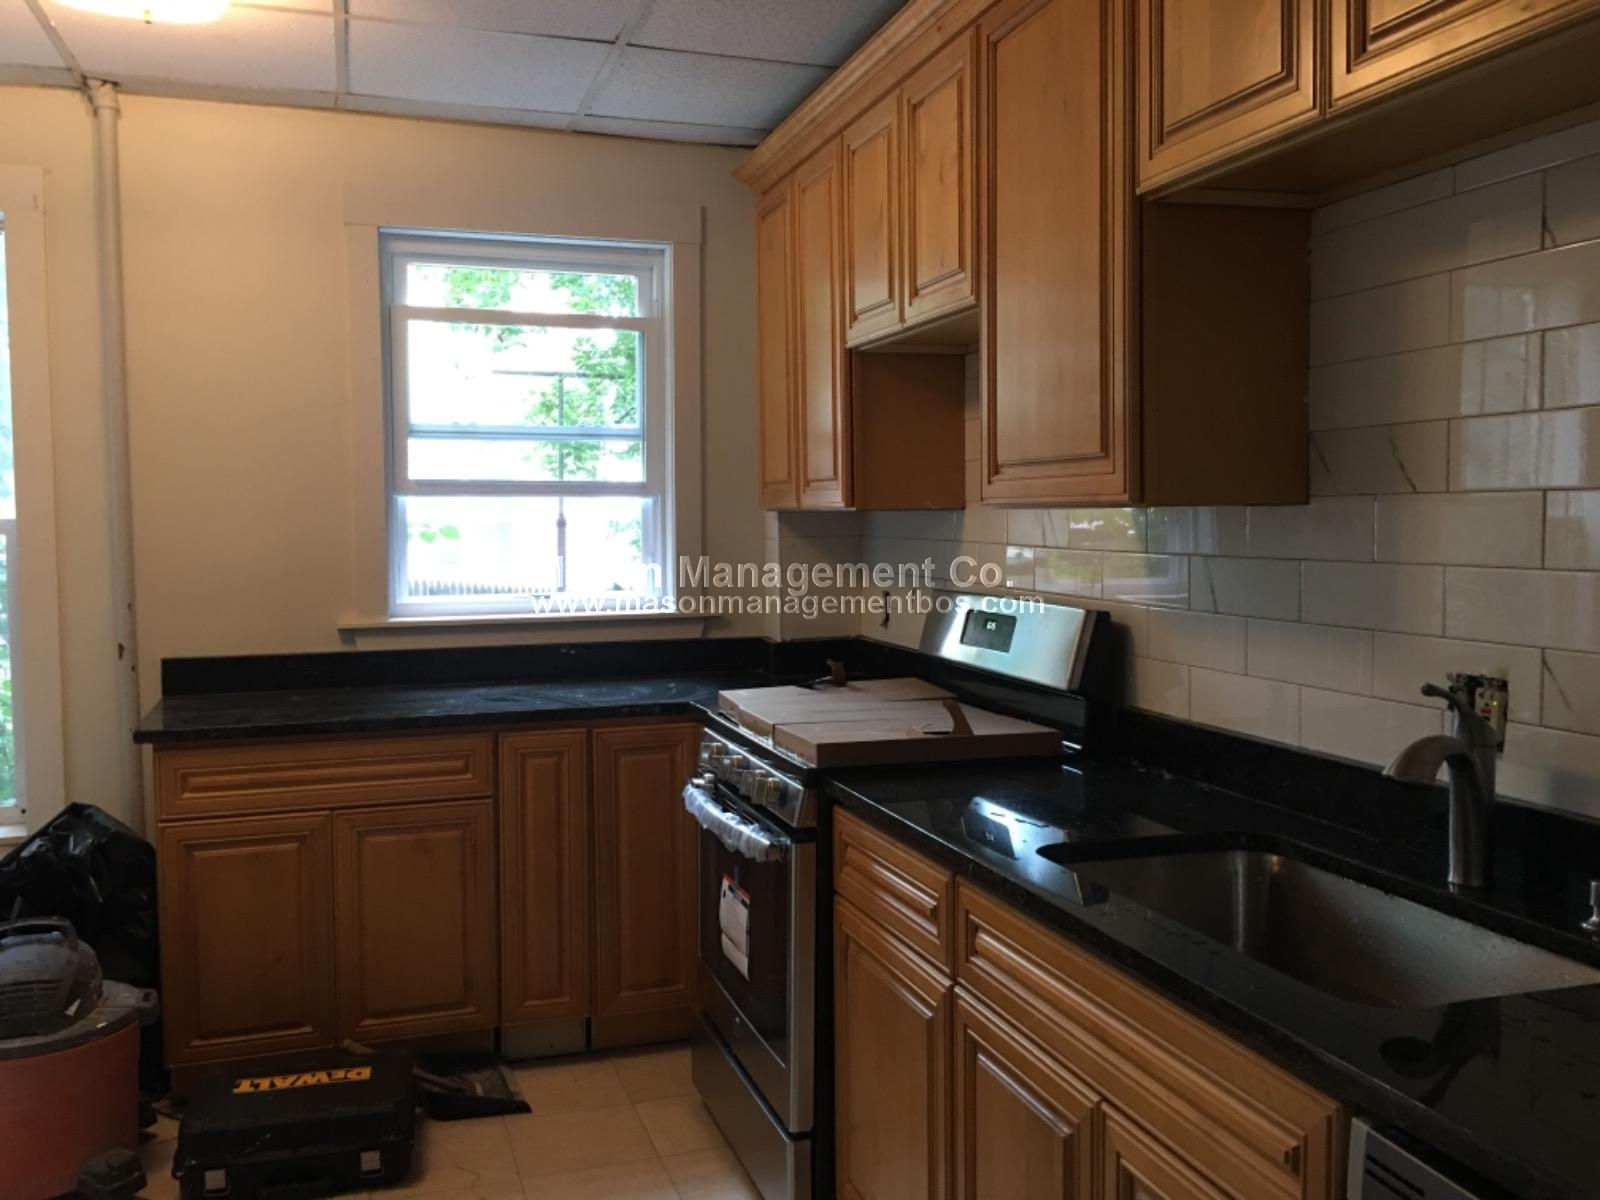 Photos of apartment on Hooker St.,Boston MA 02134